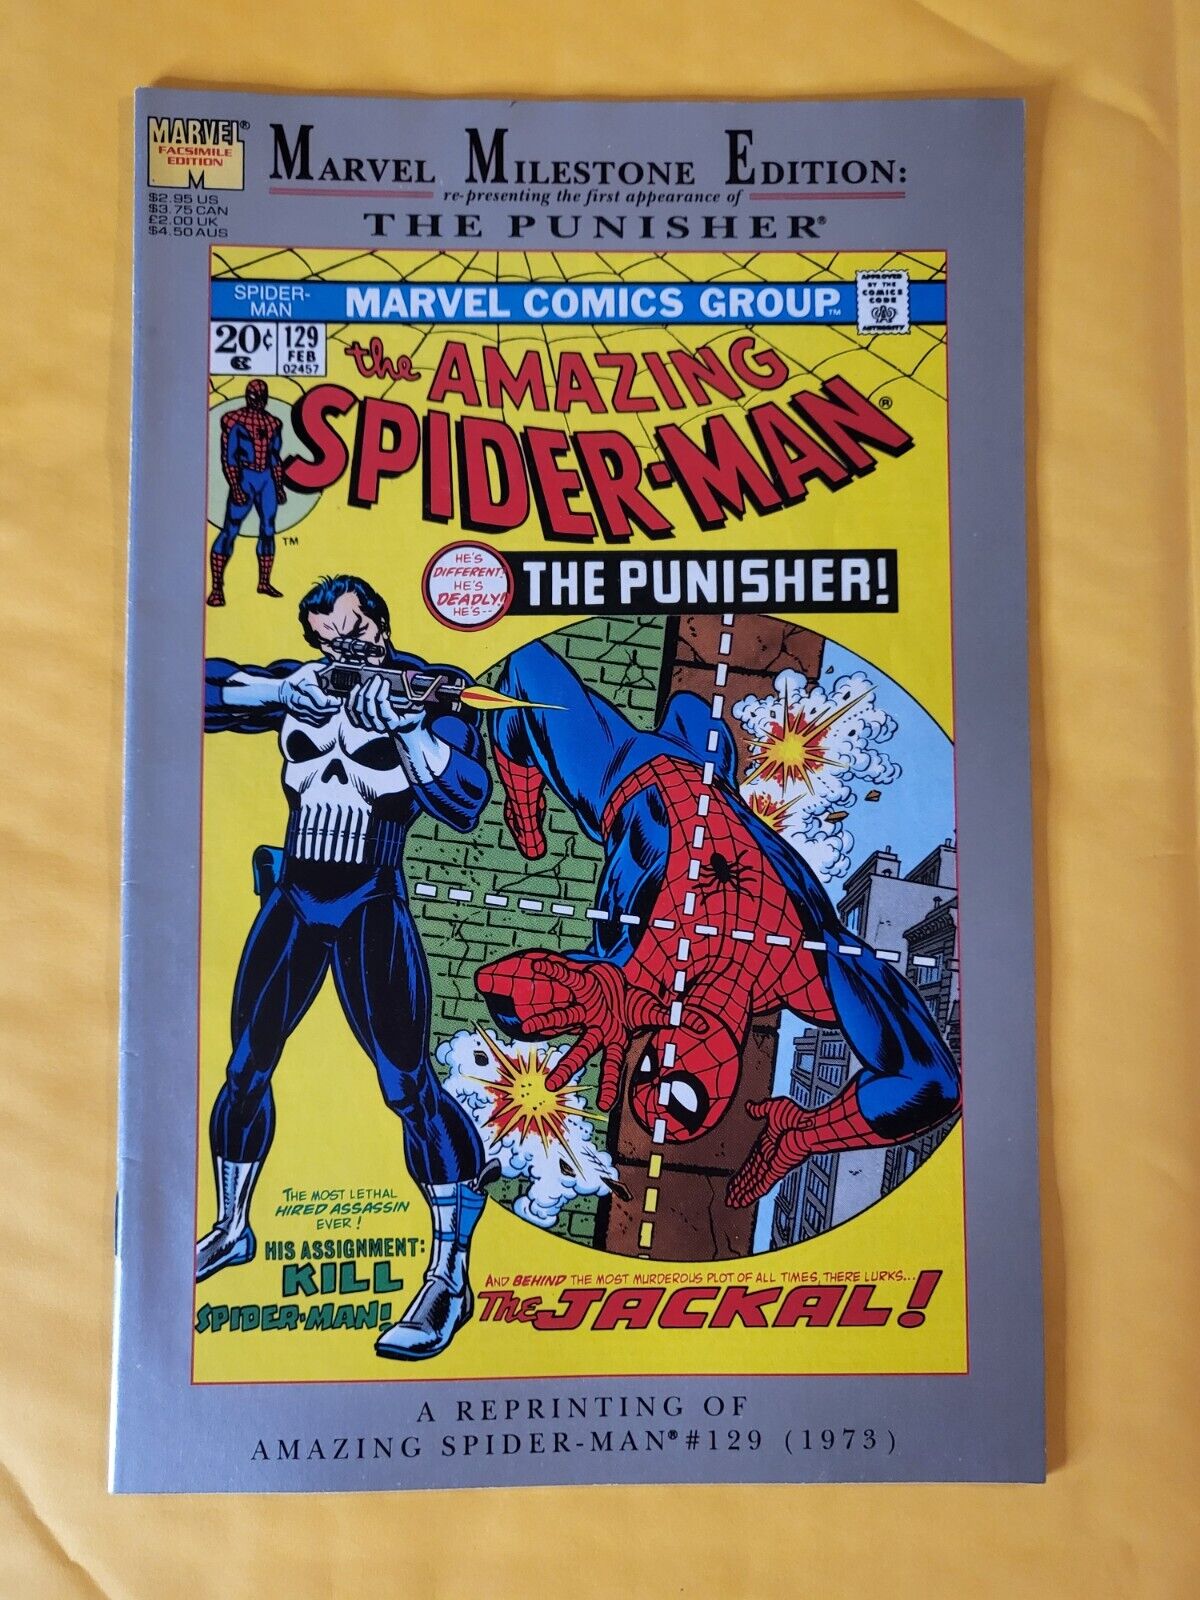 Marvel Milestone Edition AMAZING SPIDER-MAN #129 (1992) 